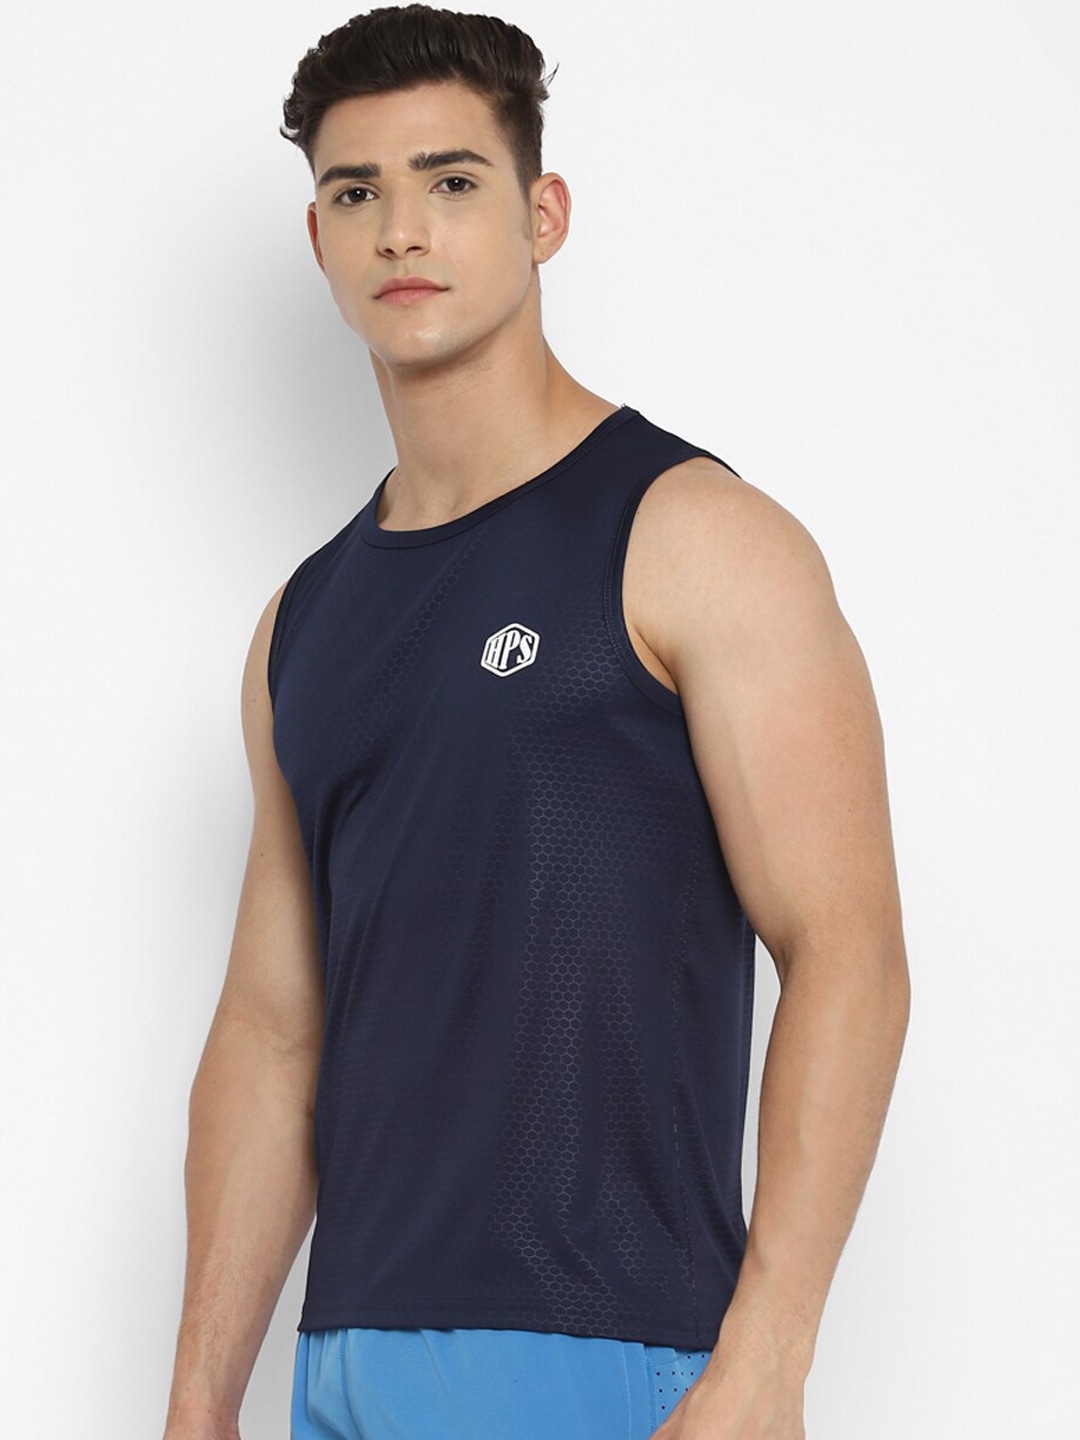 Clothing Innerwear Vests | HPS Sports Men Navy Blue Solid Innerwear Gym Vest - FS59383